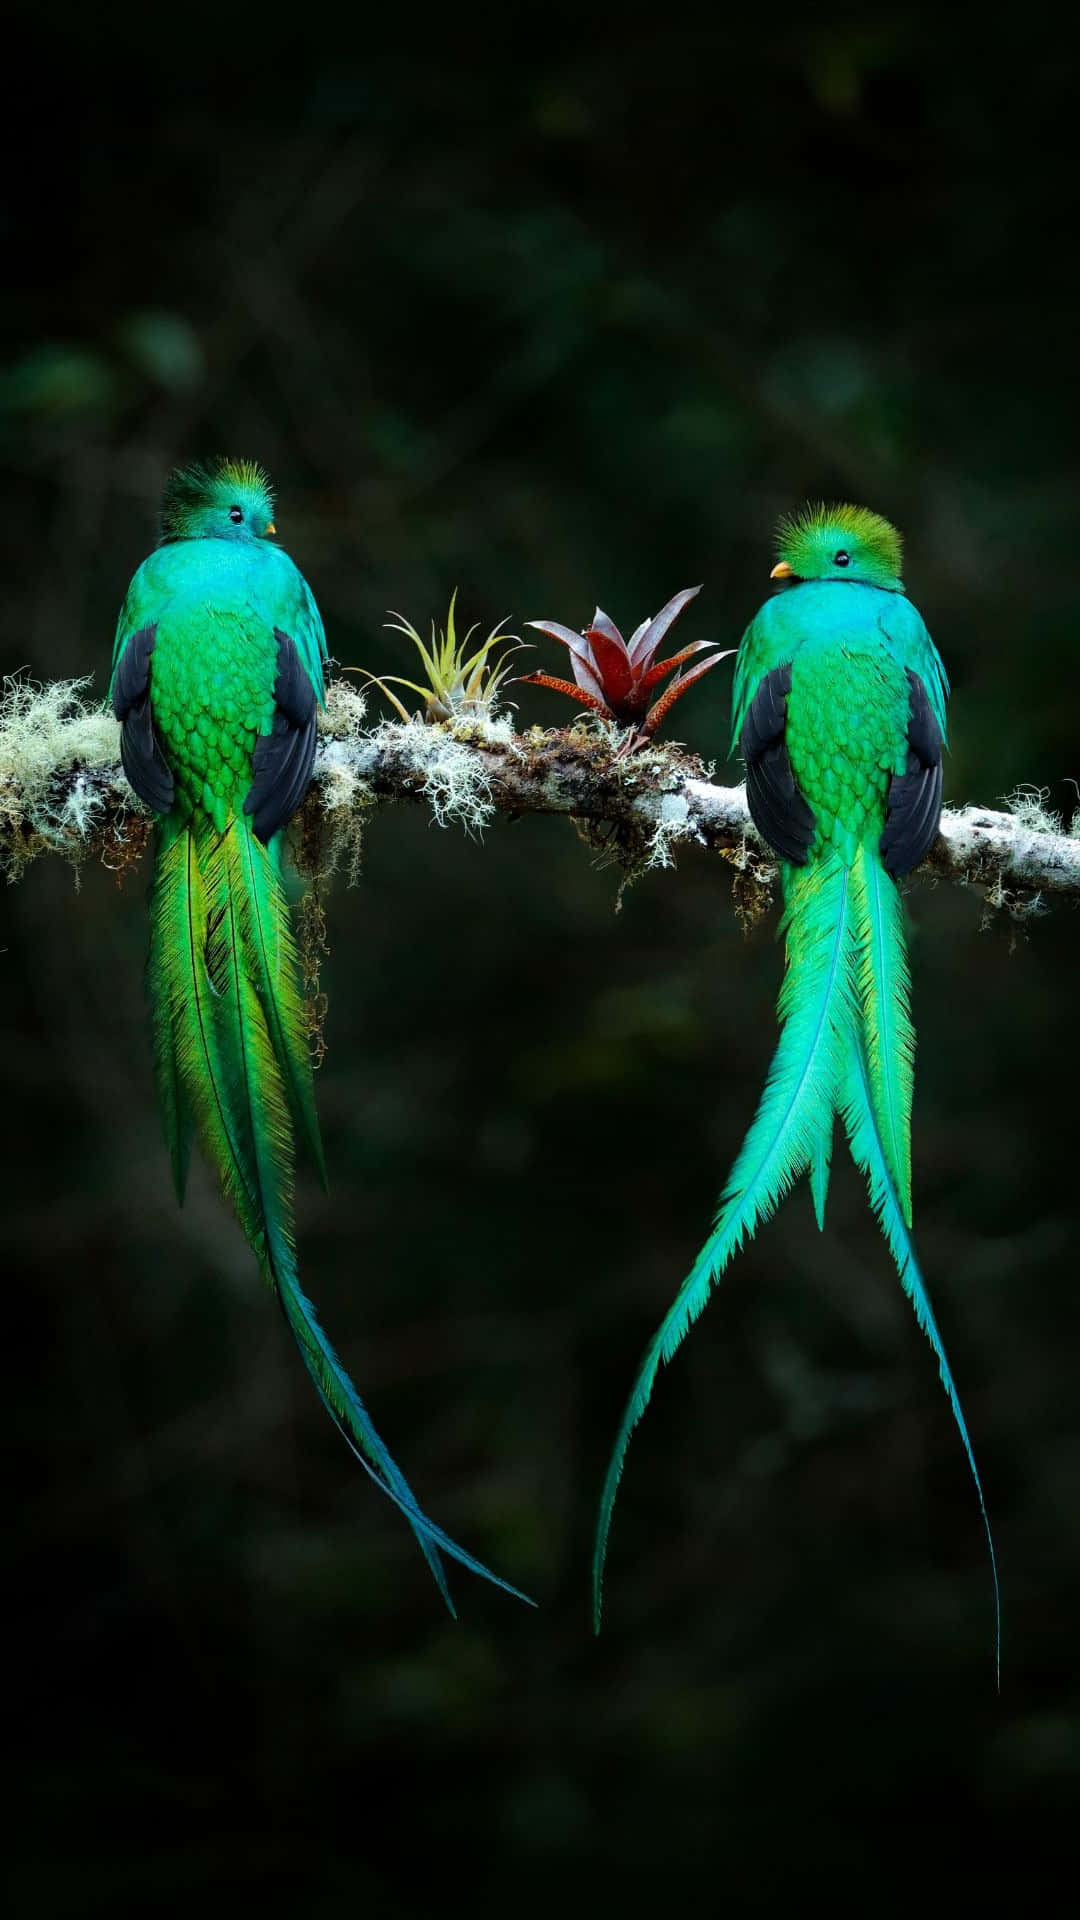 Quetzal Pair Perchedon Branch Wallpaper